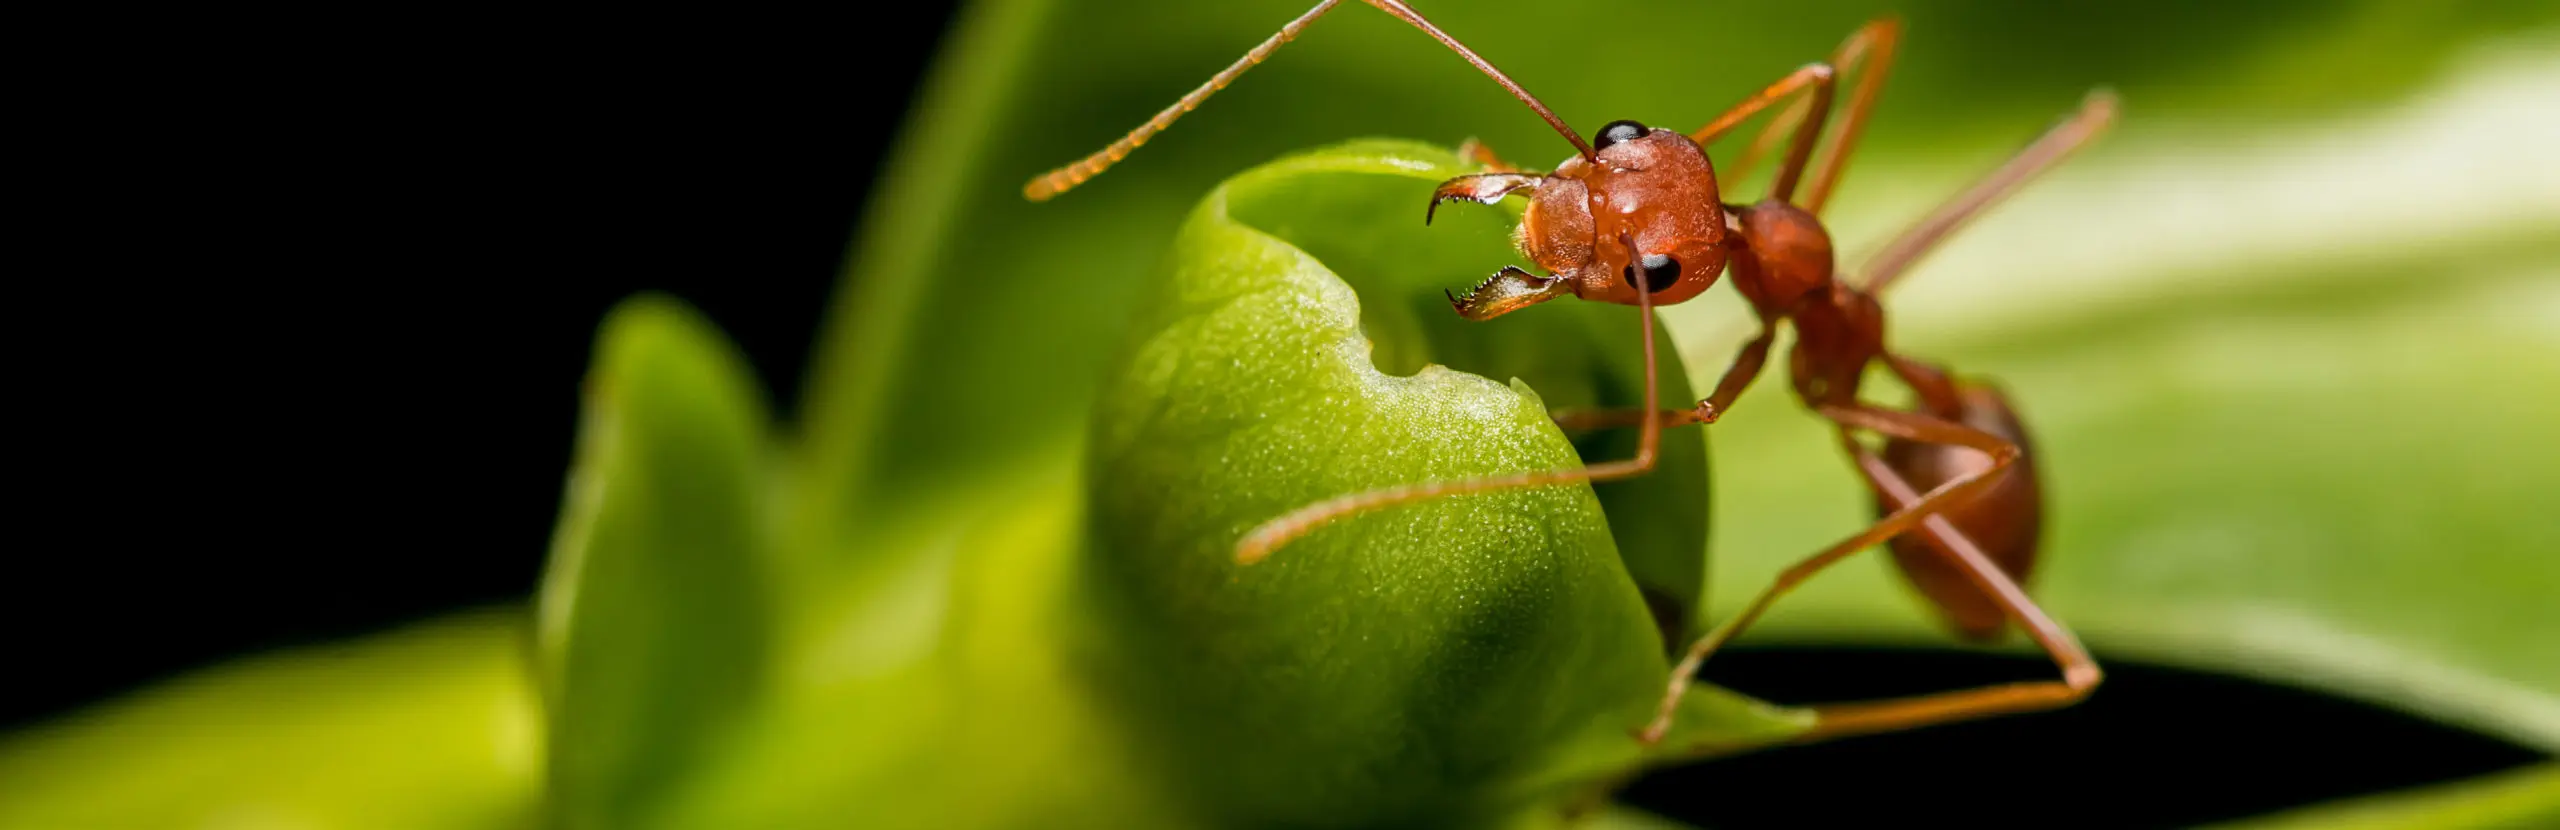 Closeup of ant ant on a leaf - Ja-Roy Pest Control serving Baton Rouge & Covington